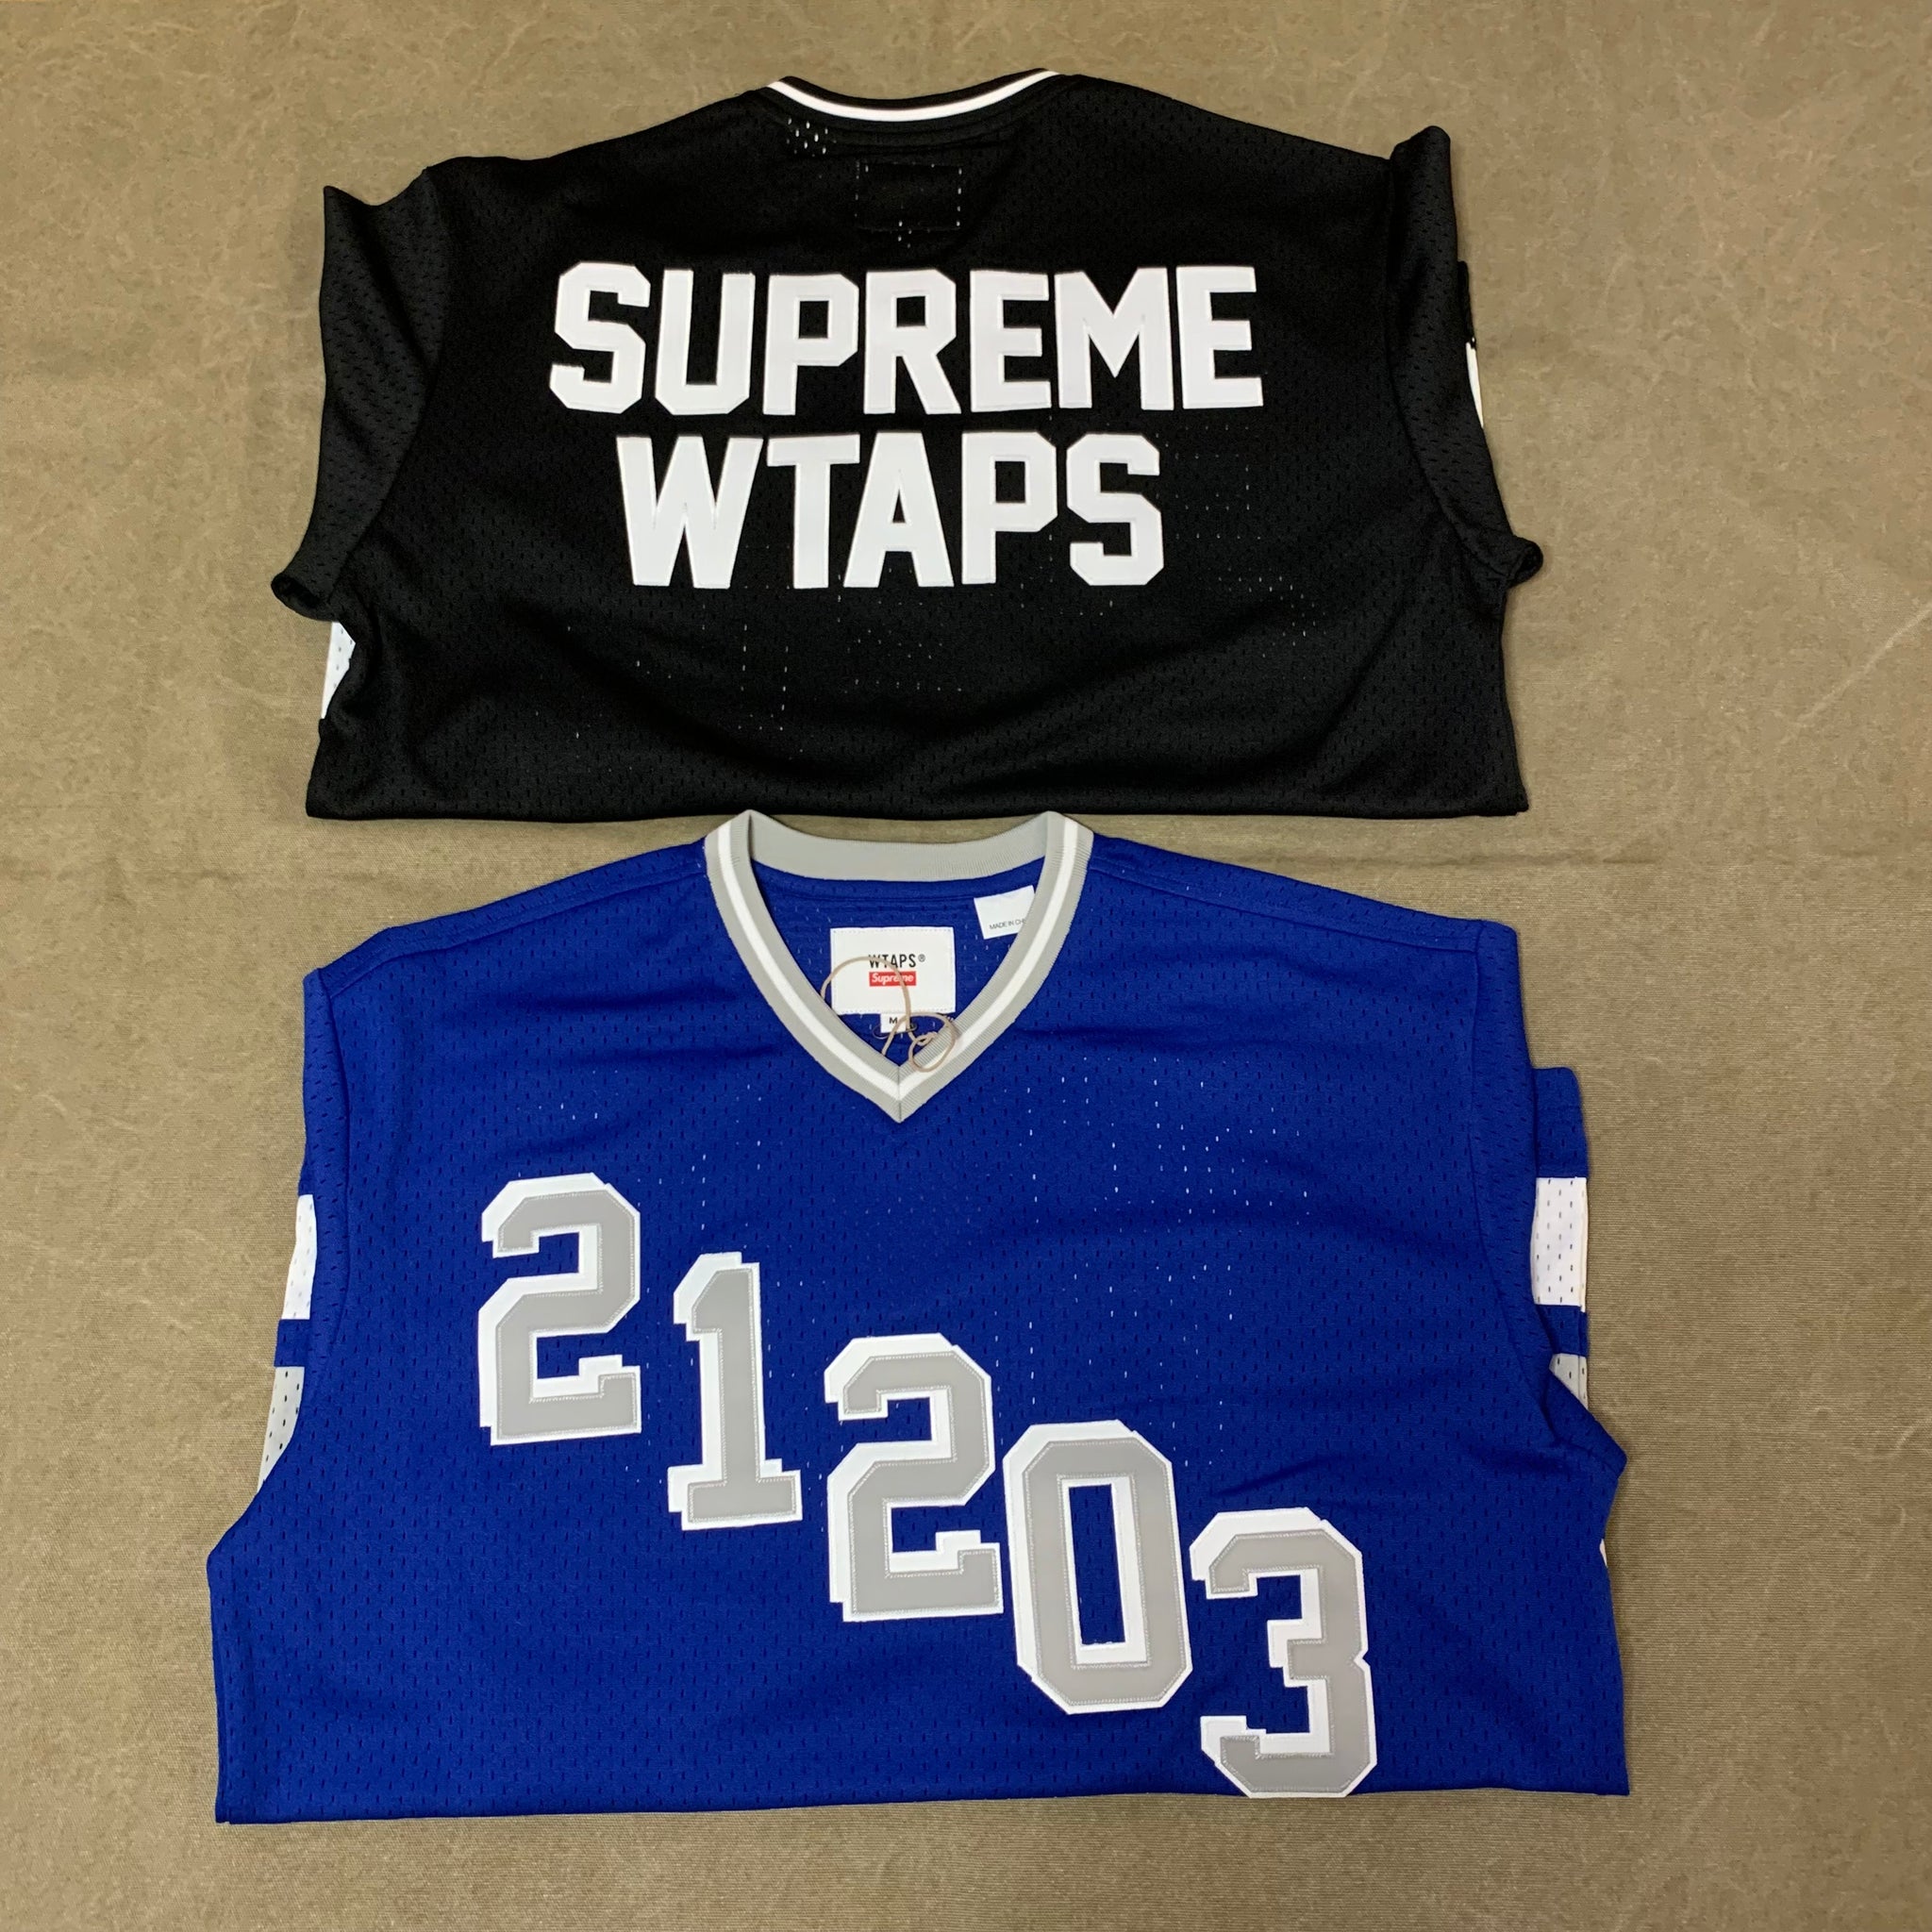 Supreme Supreme®/WTAPS®/Mitchell & Ness Hockey Jersey